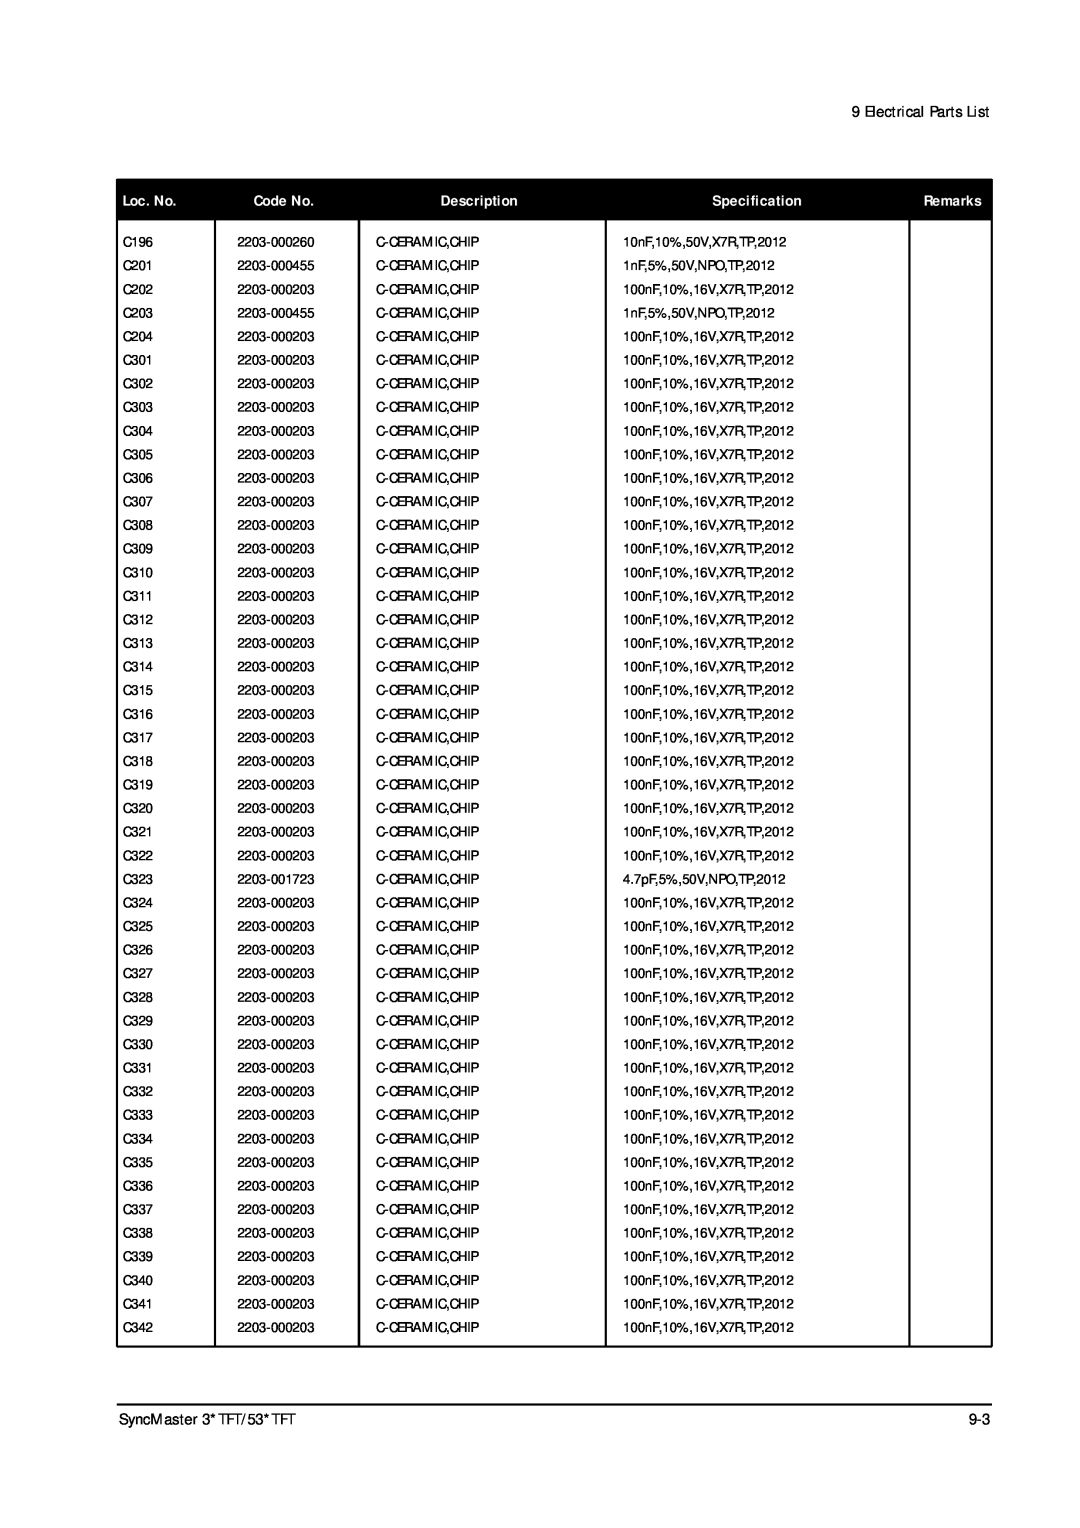 Samsung 331 TFT Electrical Parts List, SyncMaster 3*TFT/53*TFT, Loc. No, Code No, Description, Specification, Remarks 